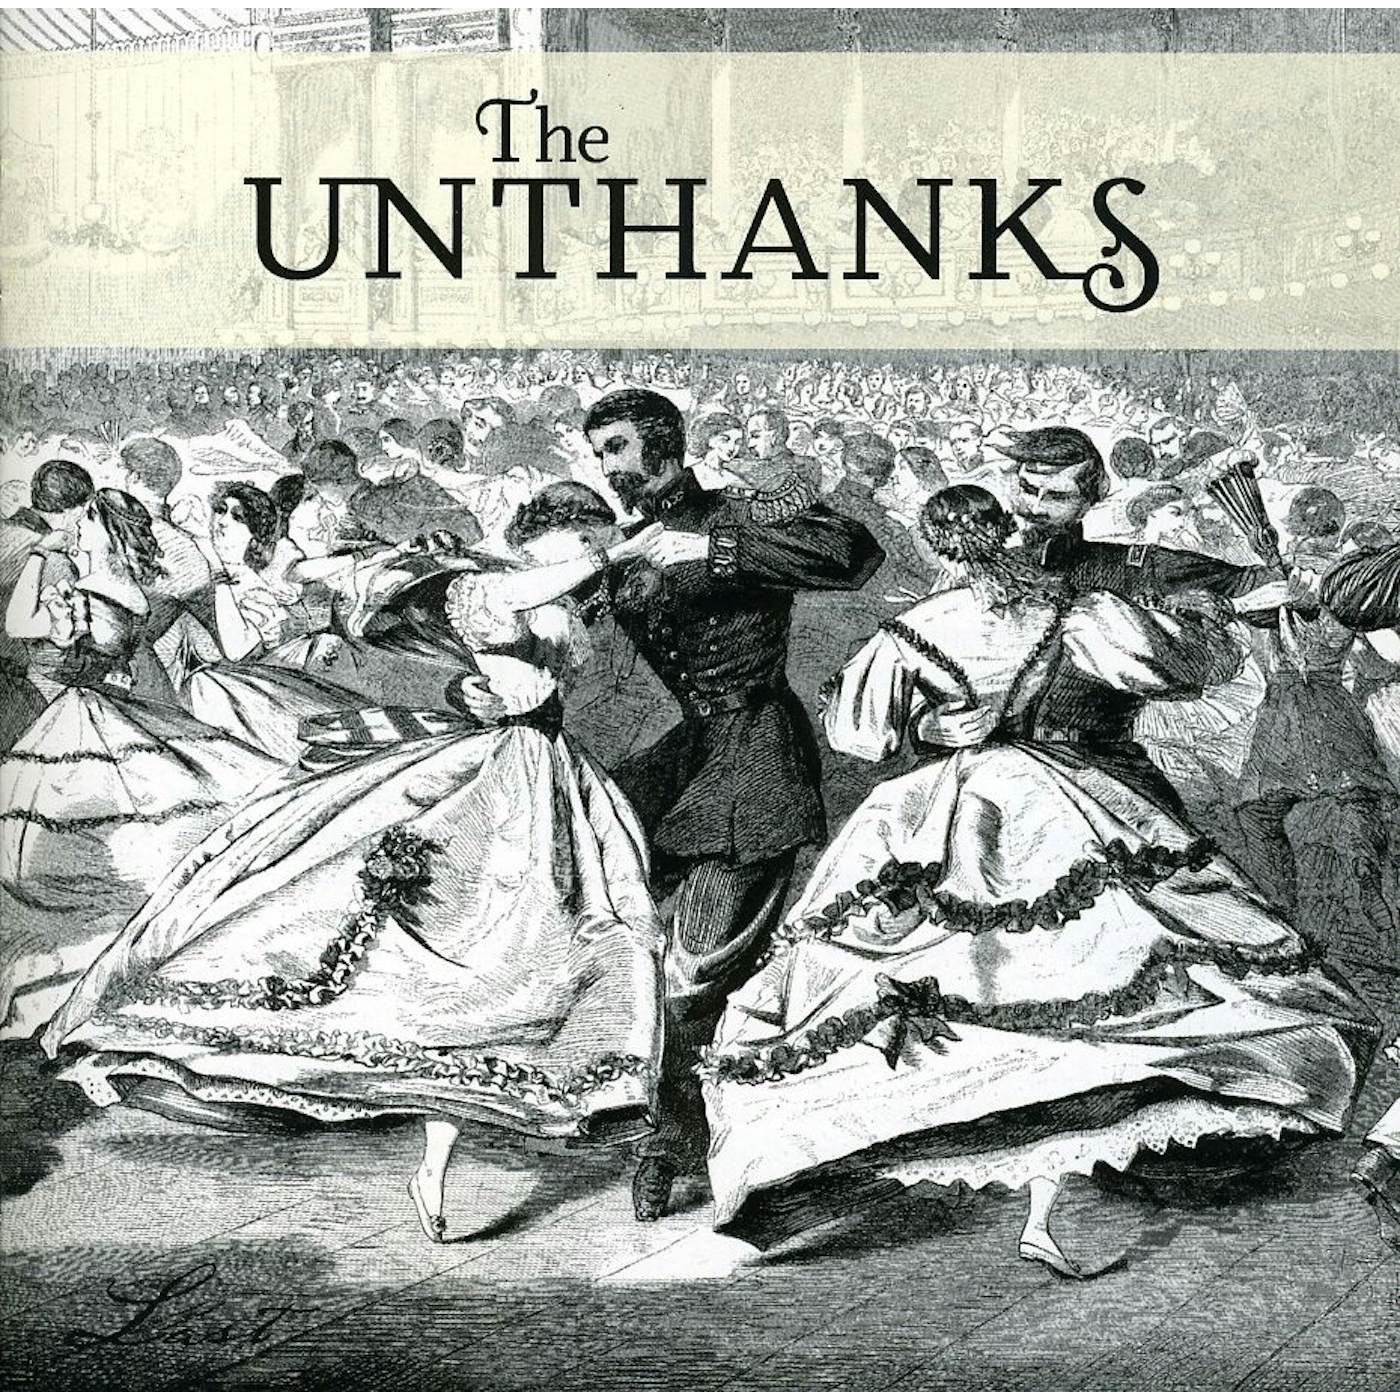 The Unthanks LAST CD